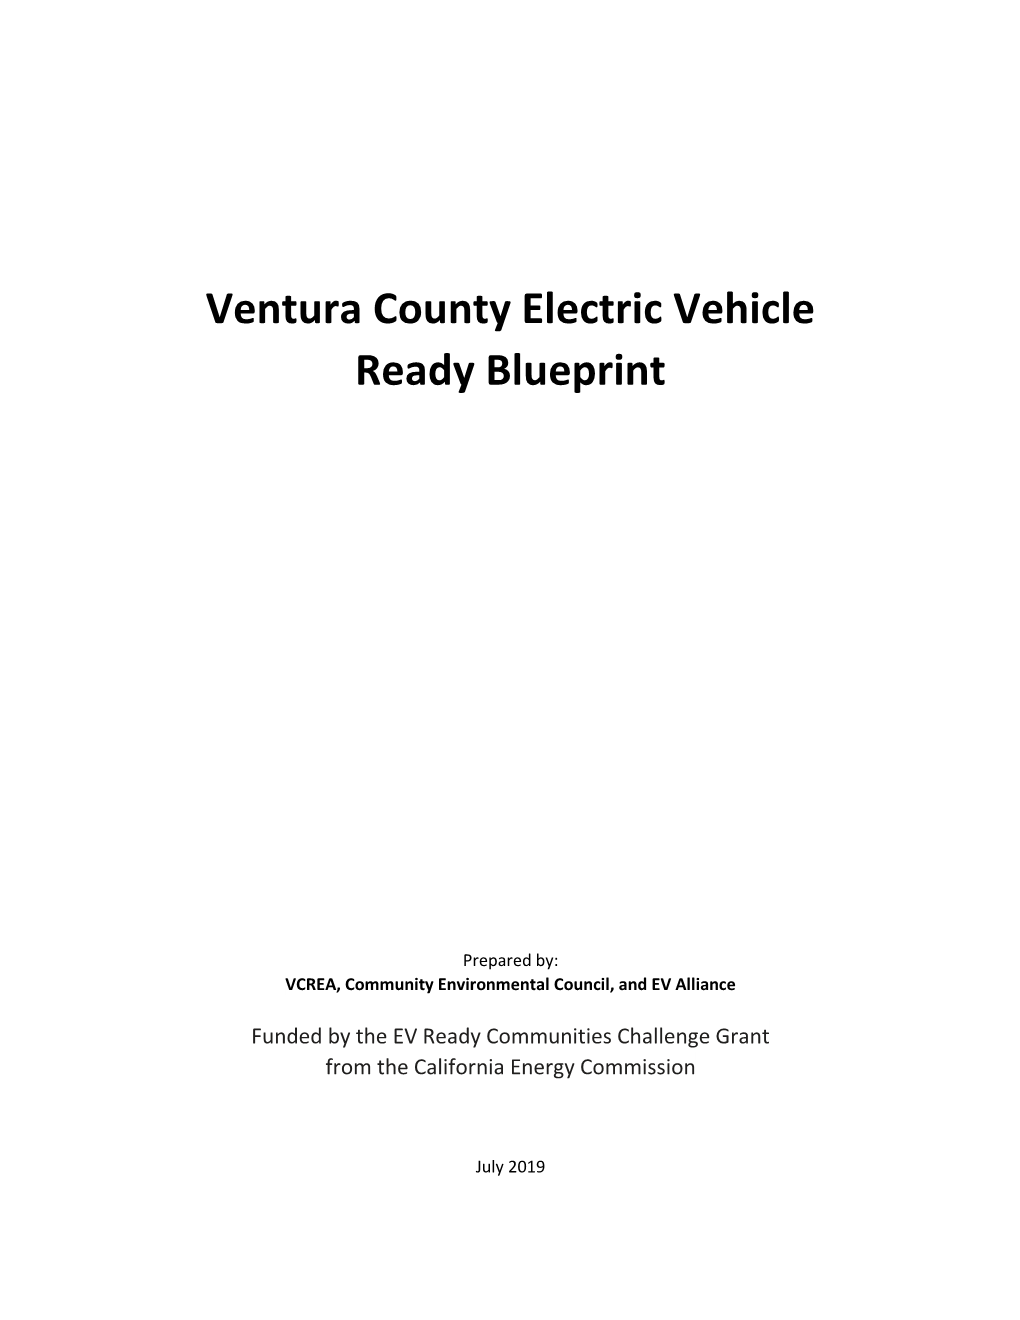 Ventura County Electric Vehicle Ready Blueprint DocsLib